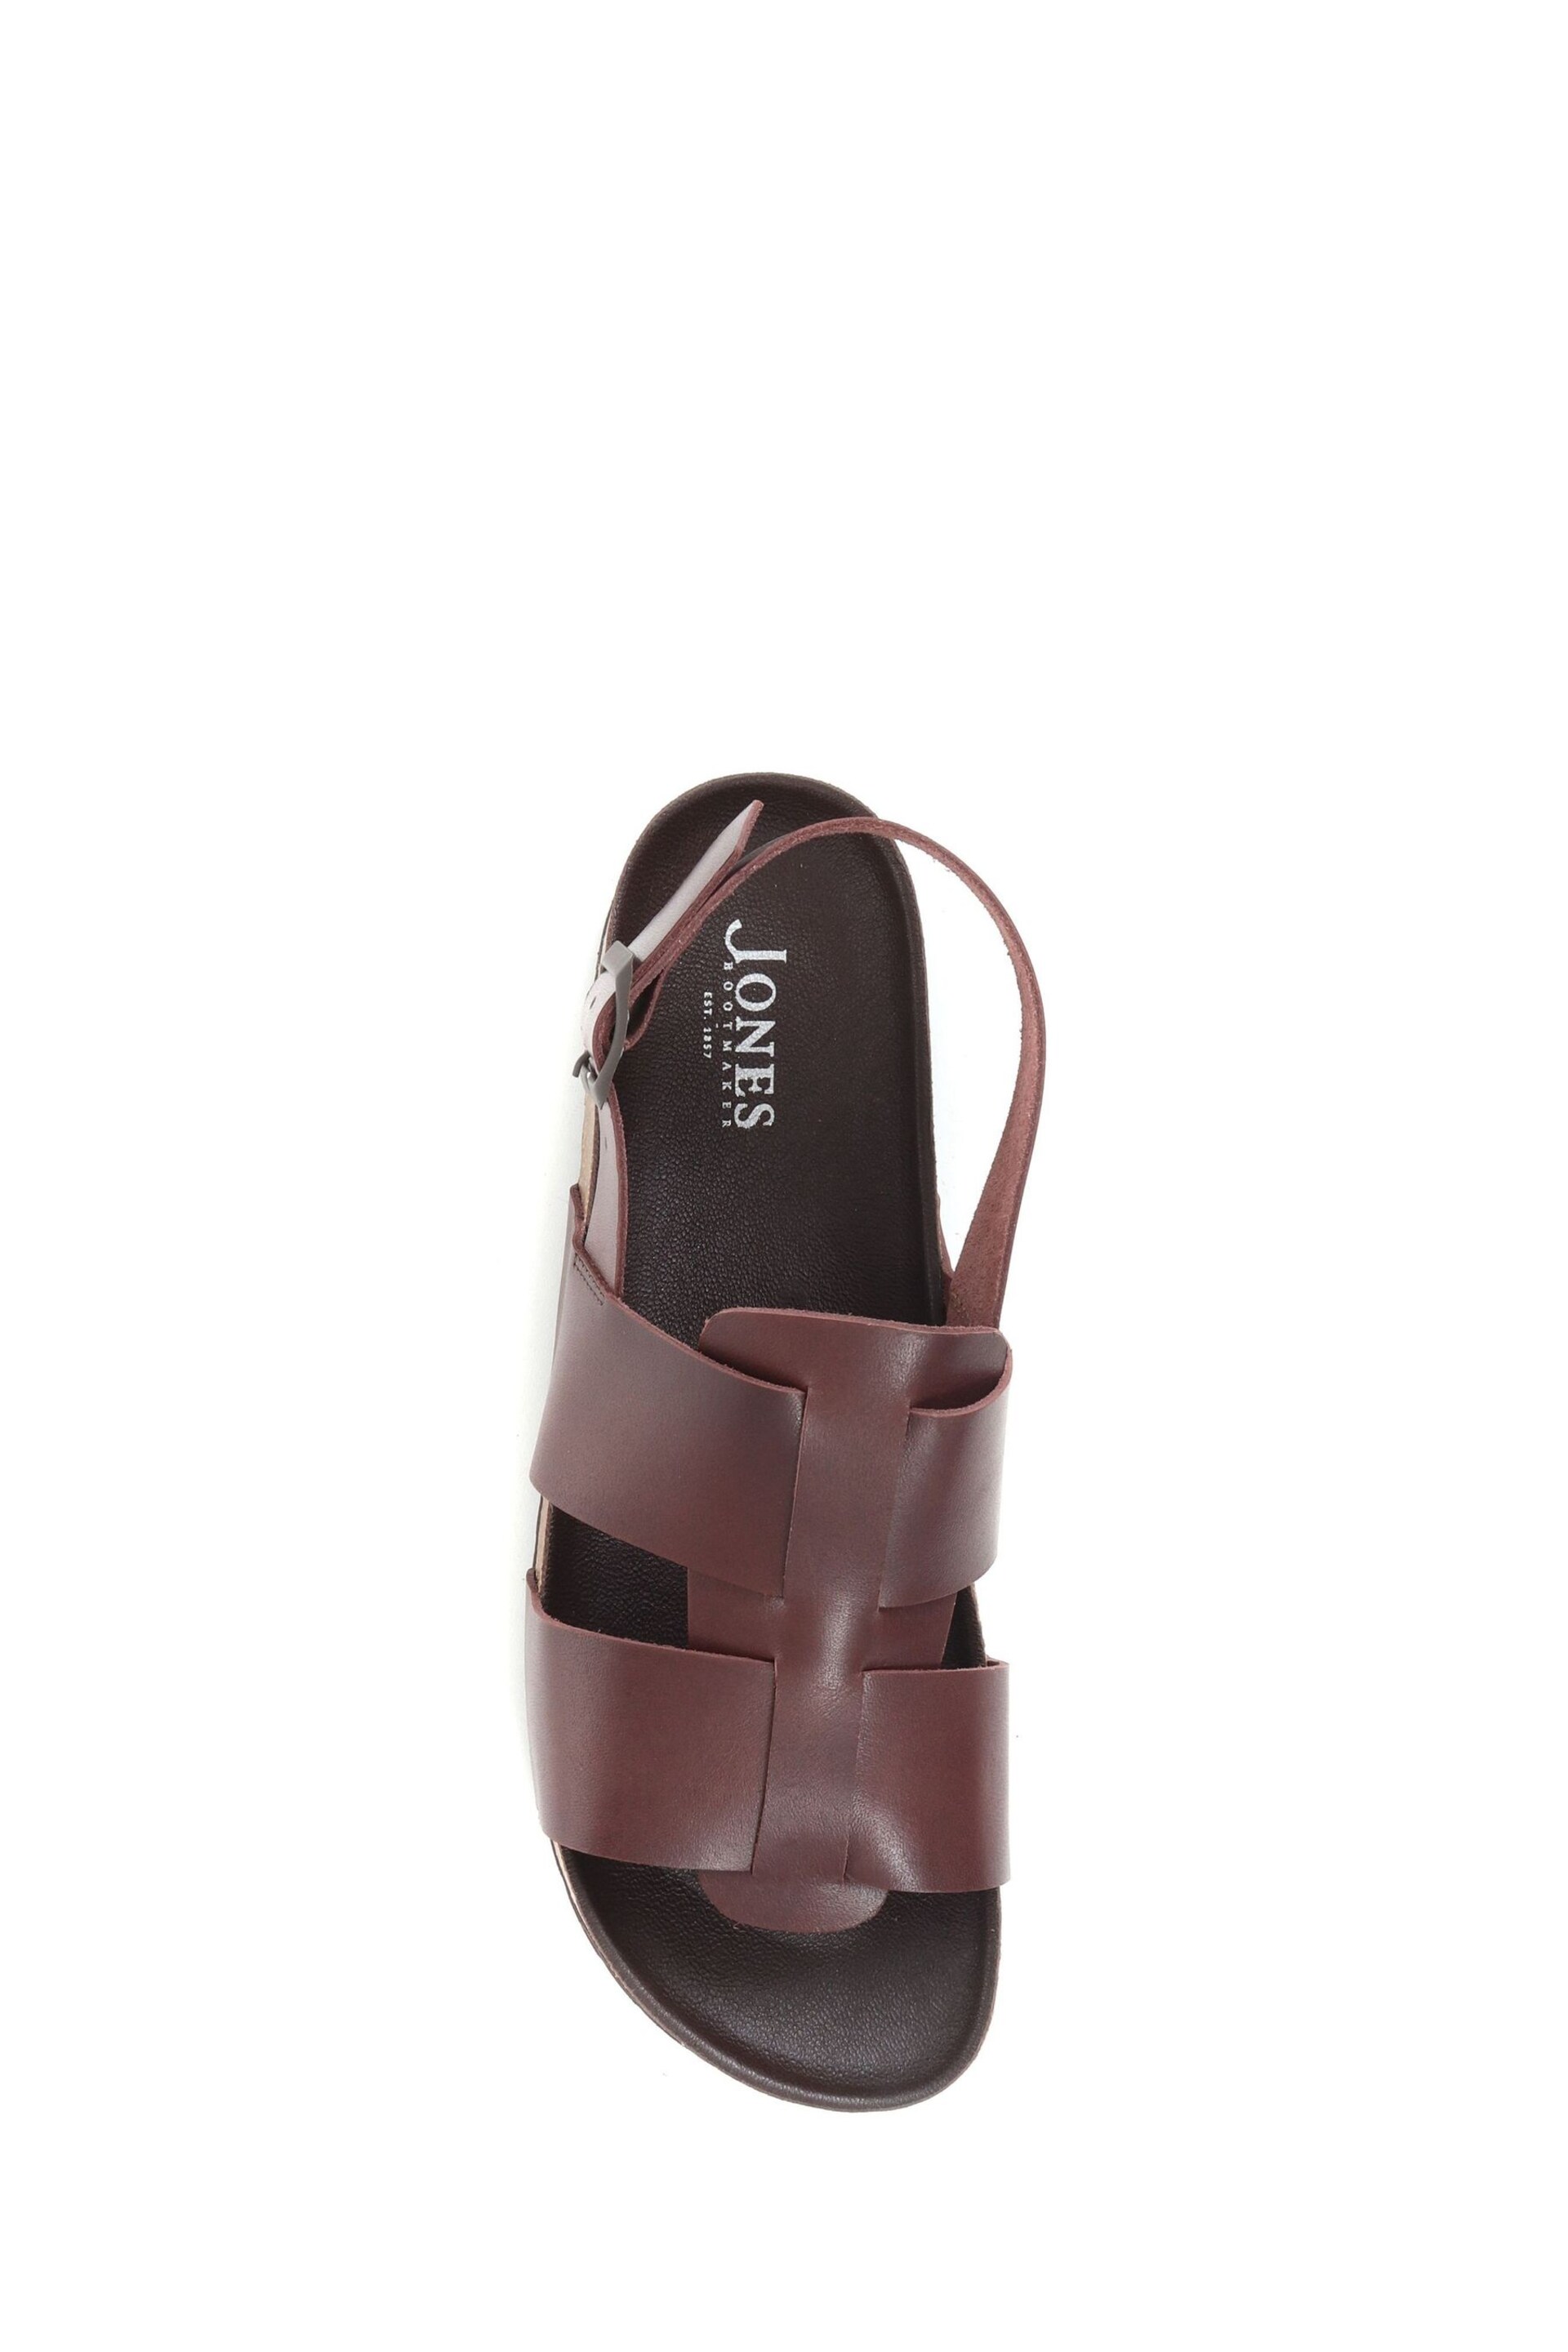 Jones Bootmaker Leather Brown Sandals - Image 3 of 5